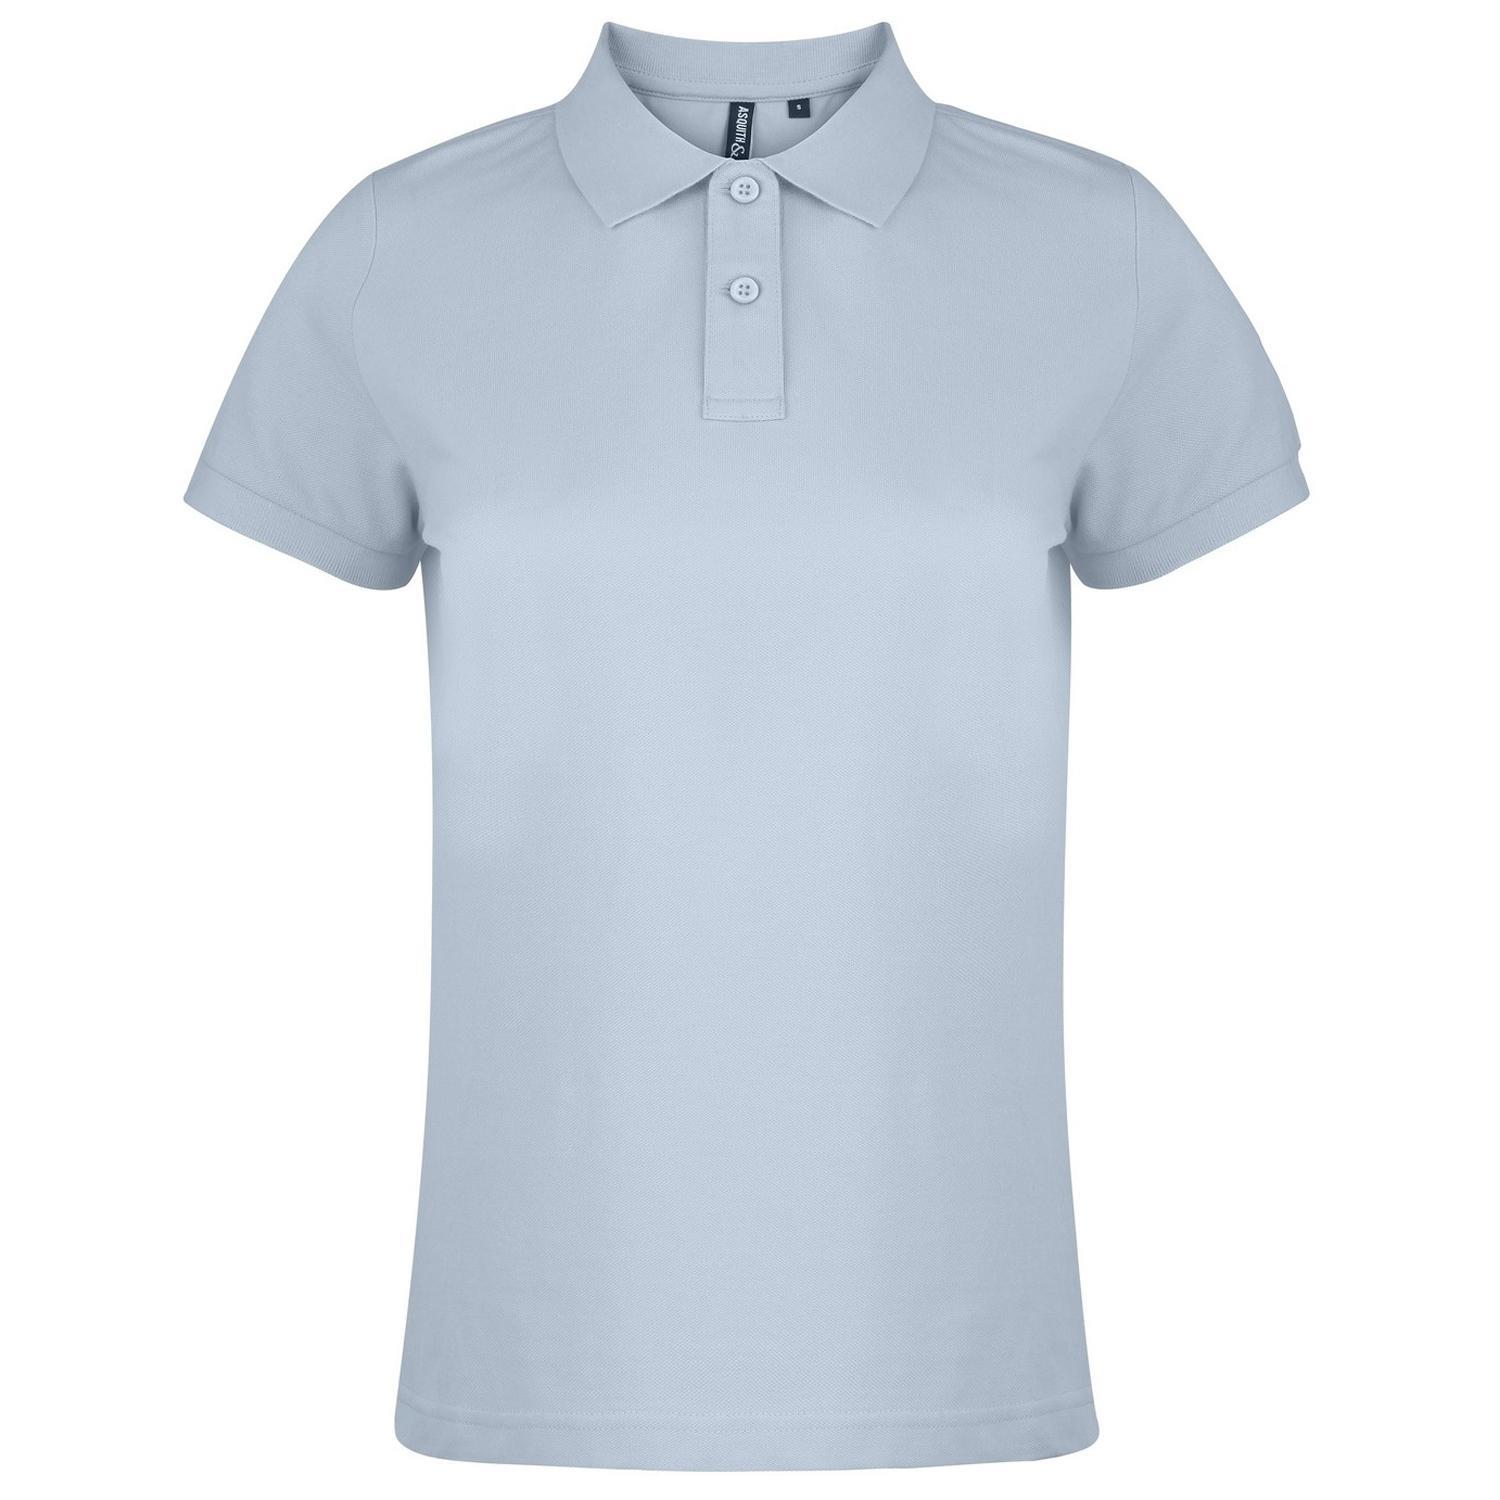 Asquith & Fox Womens/Ladies Plain Short Sleeve Polo Shirt (Turquoise) (M)